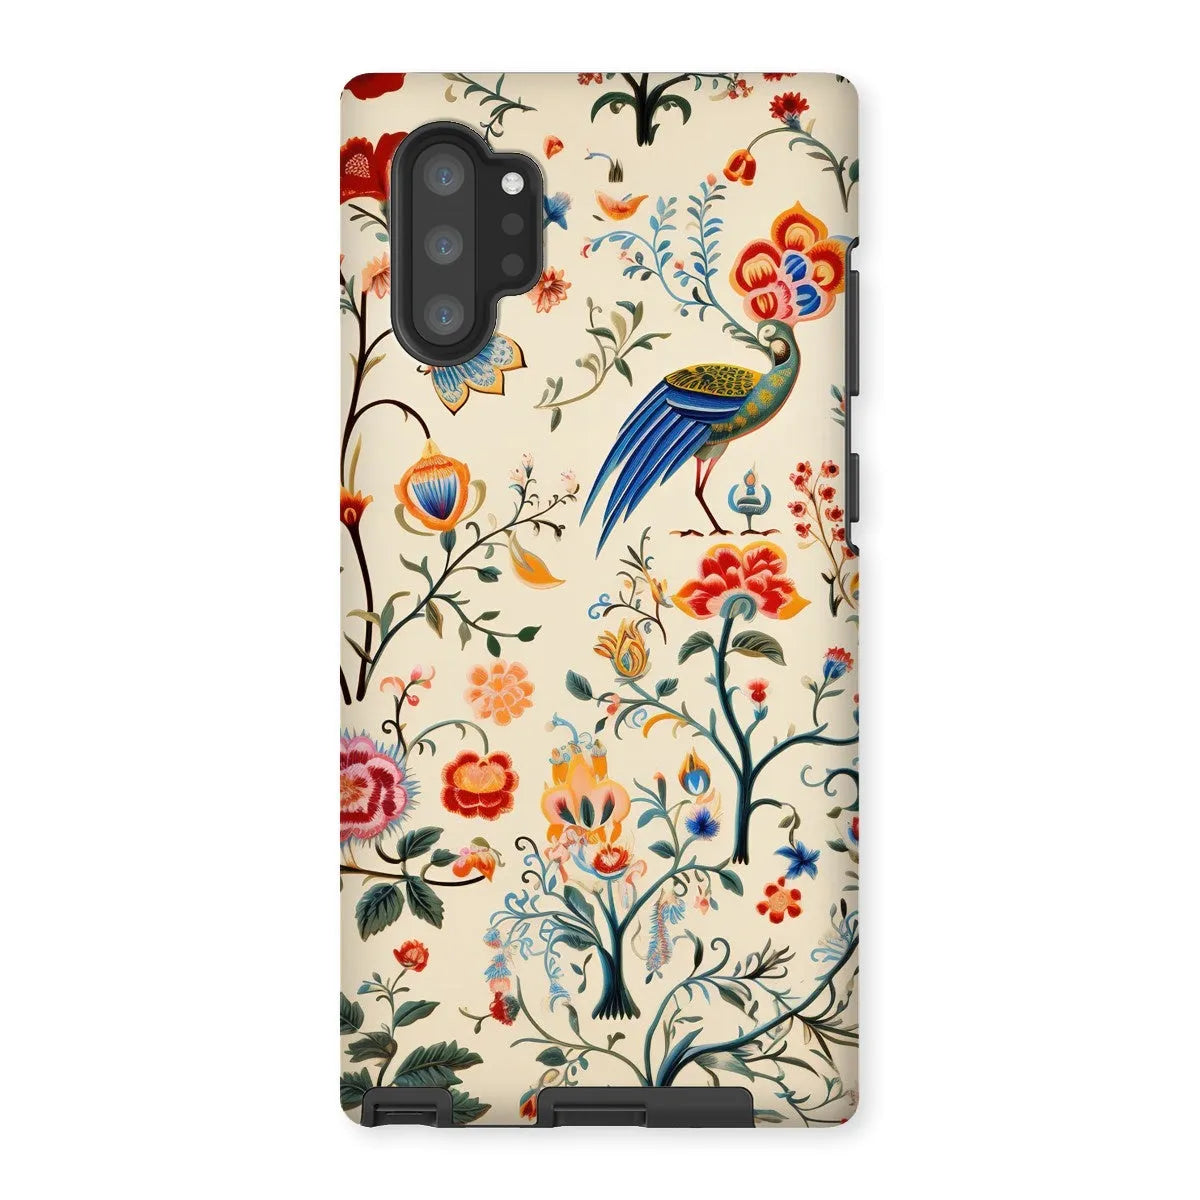 Birdwatchers - Kitsch Bird Art Phone Case - Samsung Galaxy Note 10p / Matte - Mobile Phone Cases - Aesthetic Art